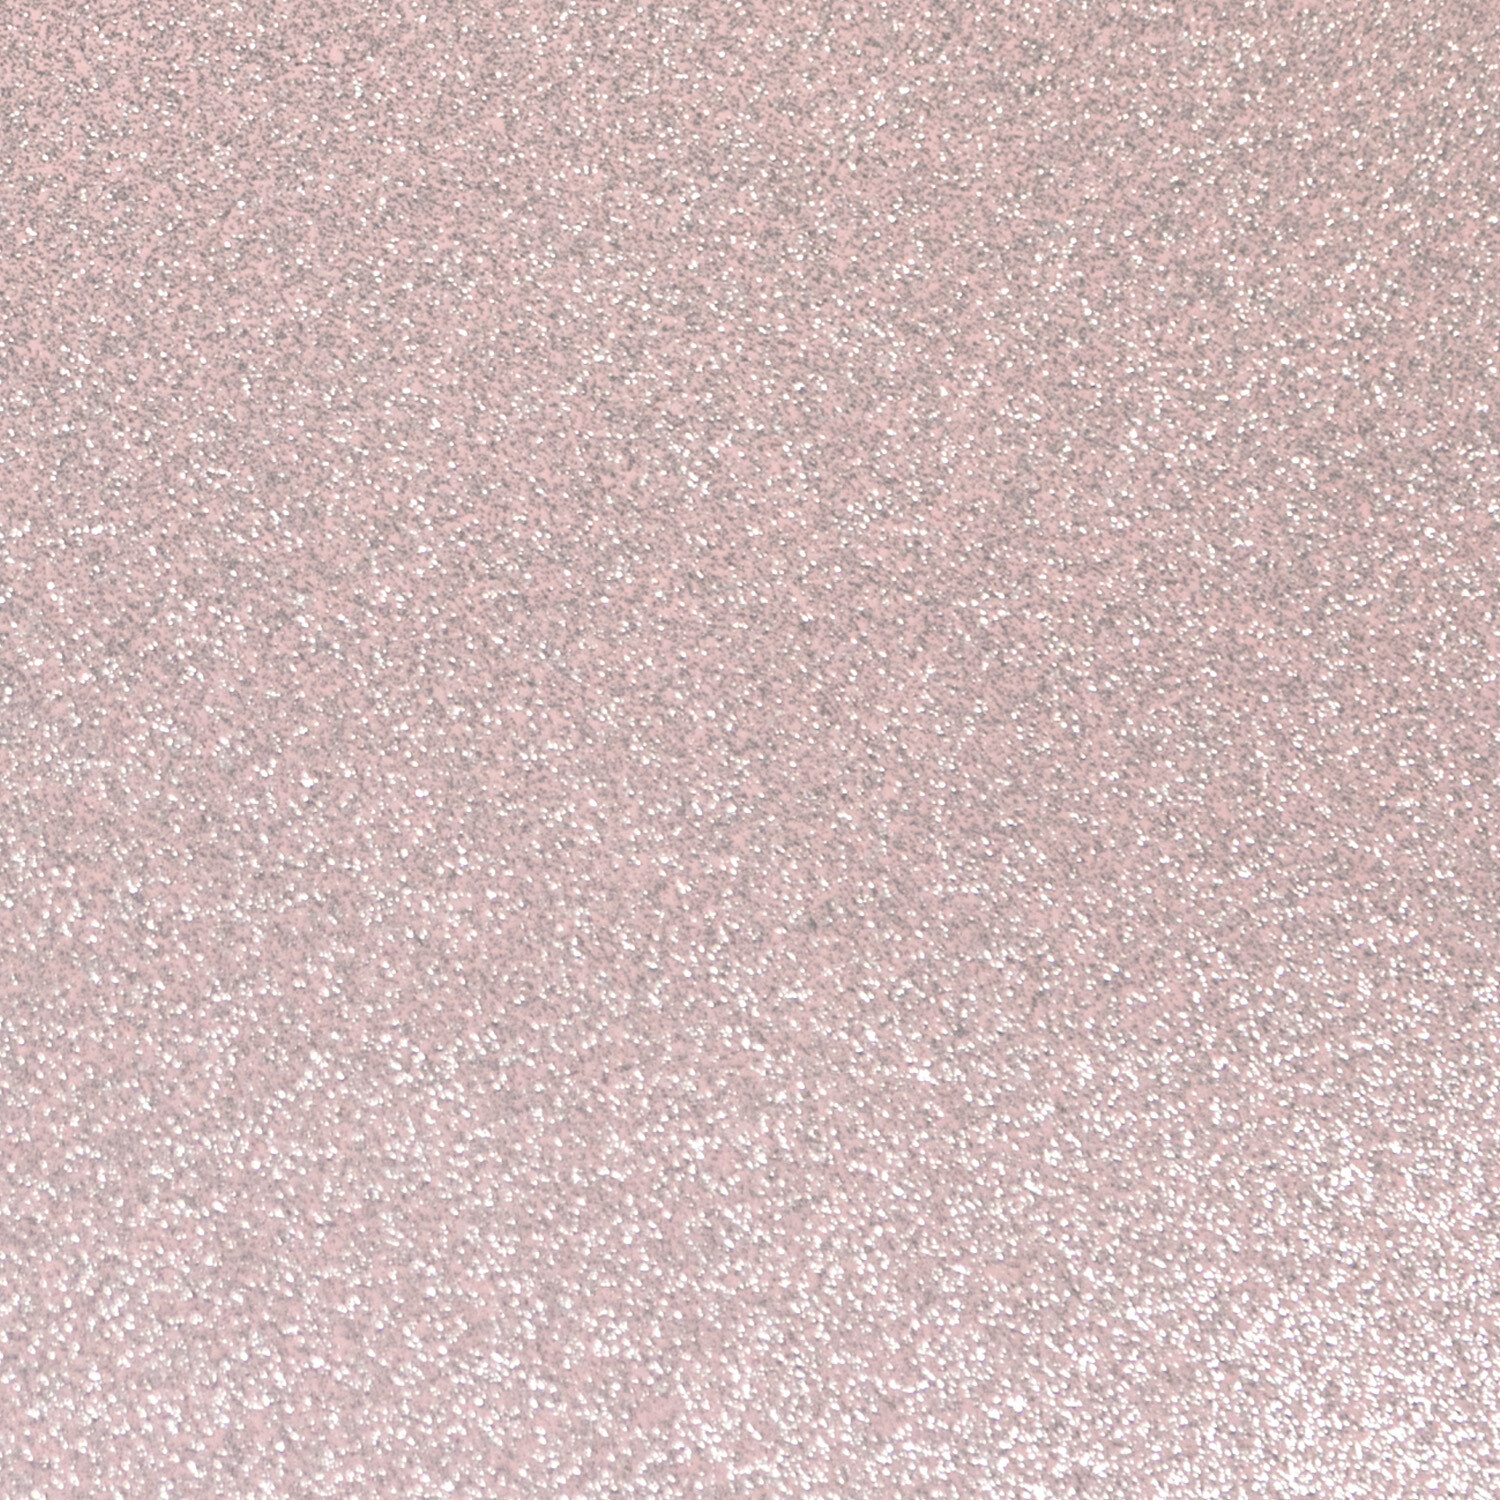 CLEARANCE Siser VideoFlex Glitter Cotton Candy (Translucent)